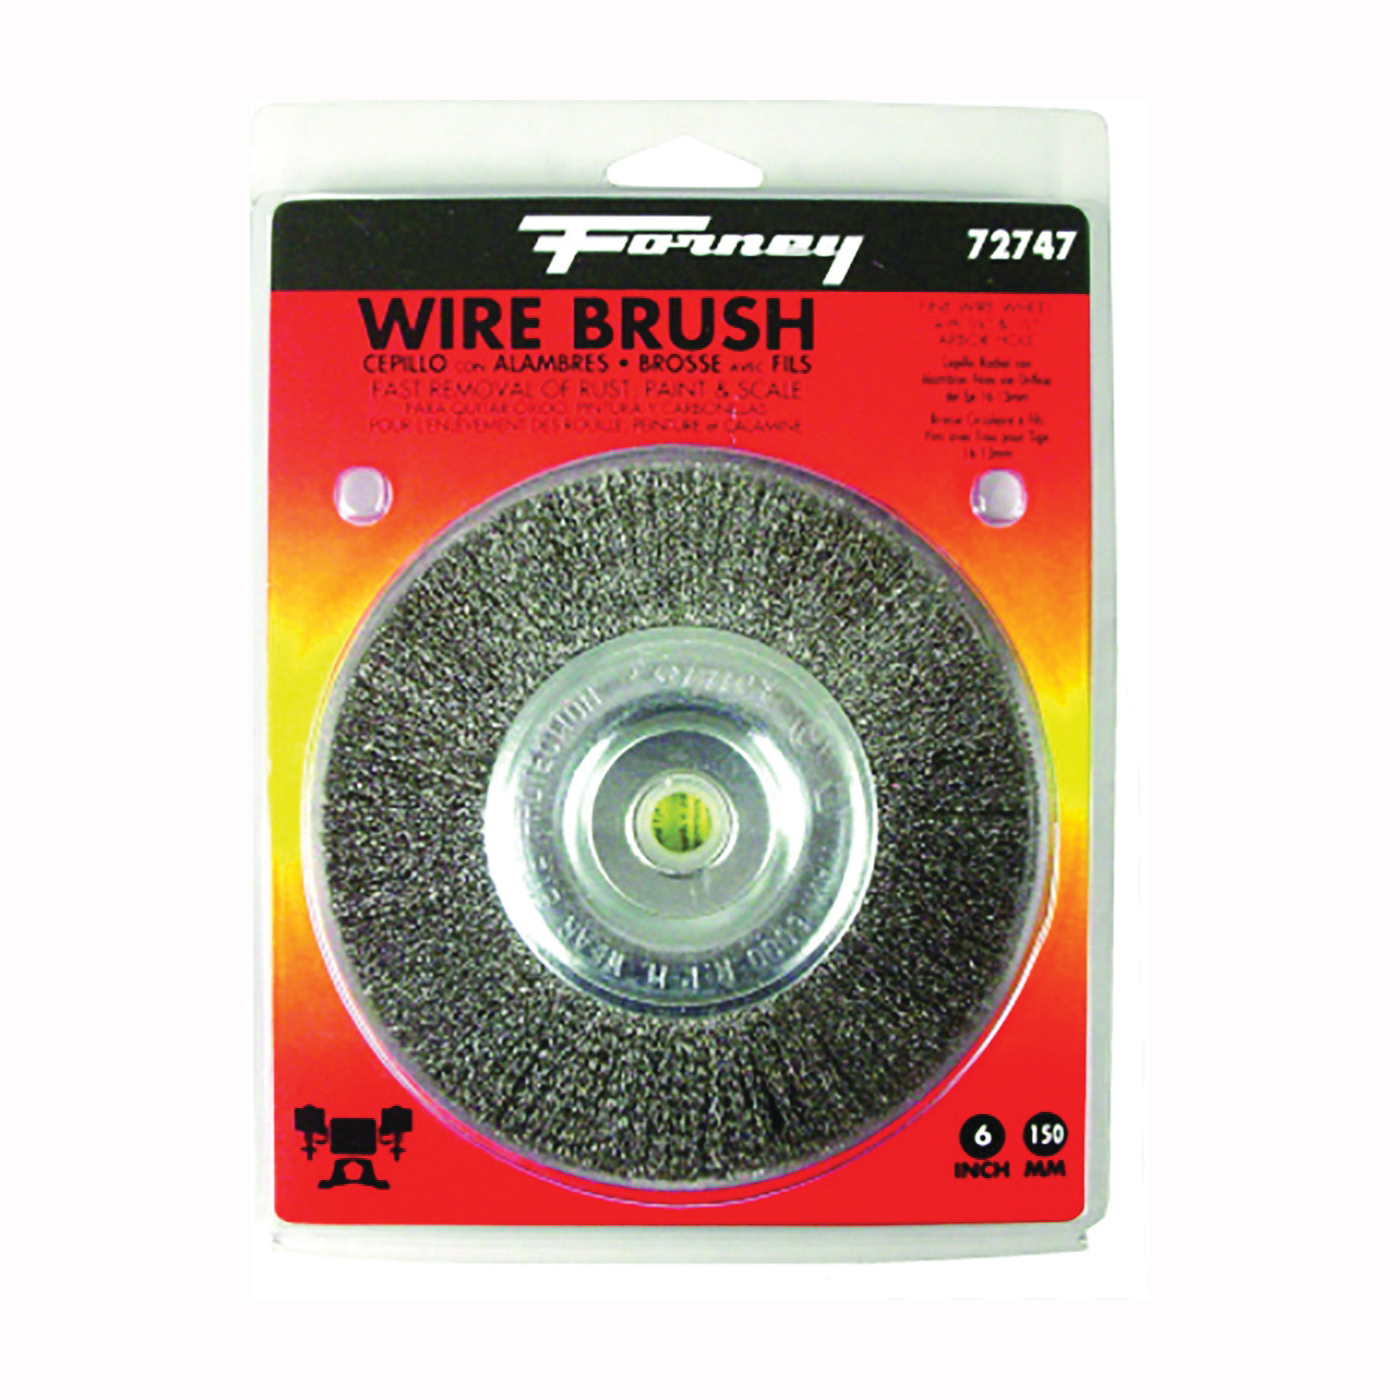 72747 Wire Wheel Brush, 6 in Dia, 1/2 to 5/8 in Arbor/Shank, 0.008 in Dia Bristle